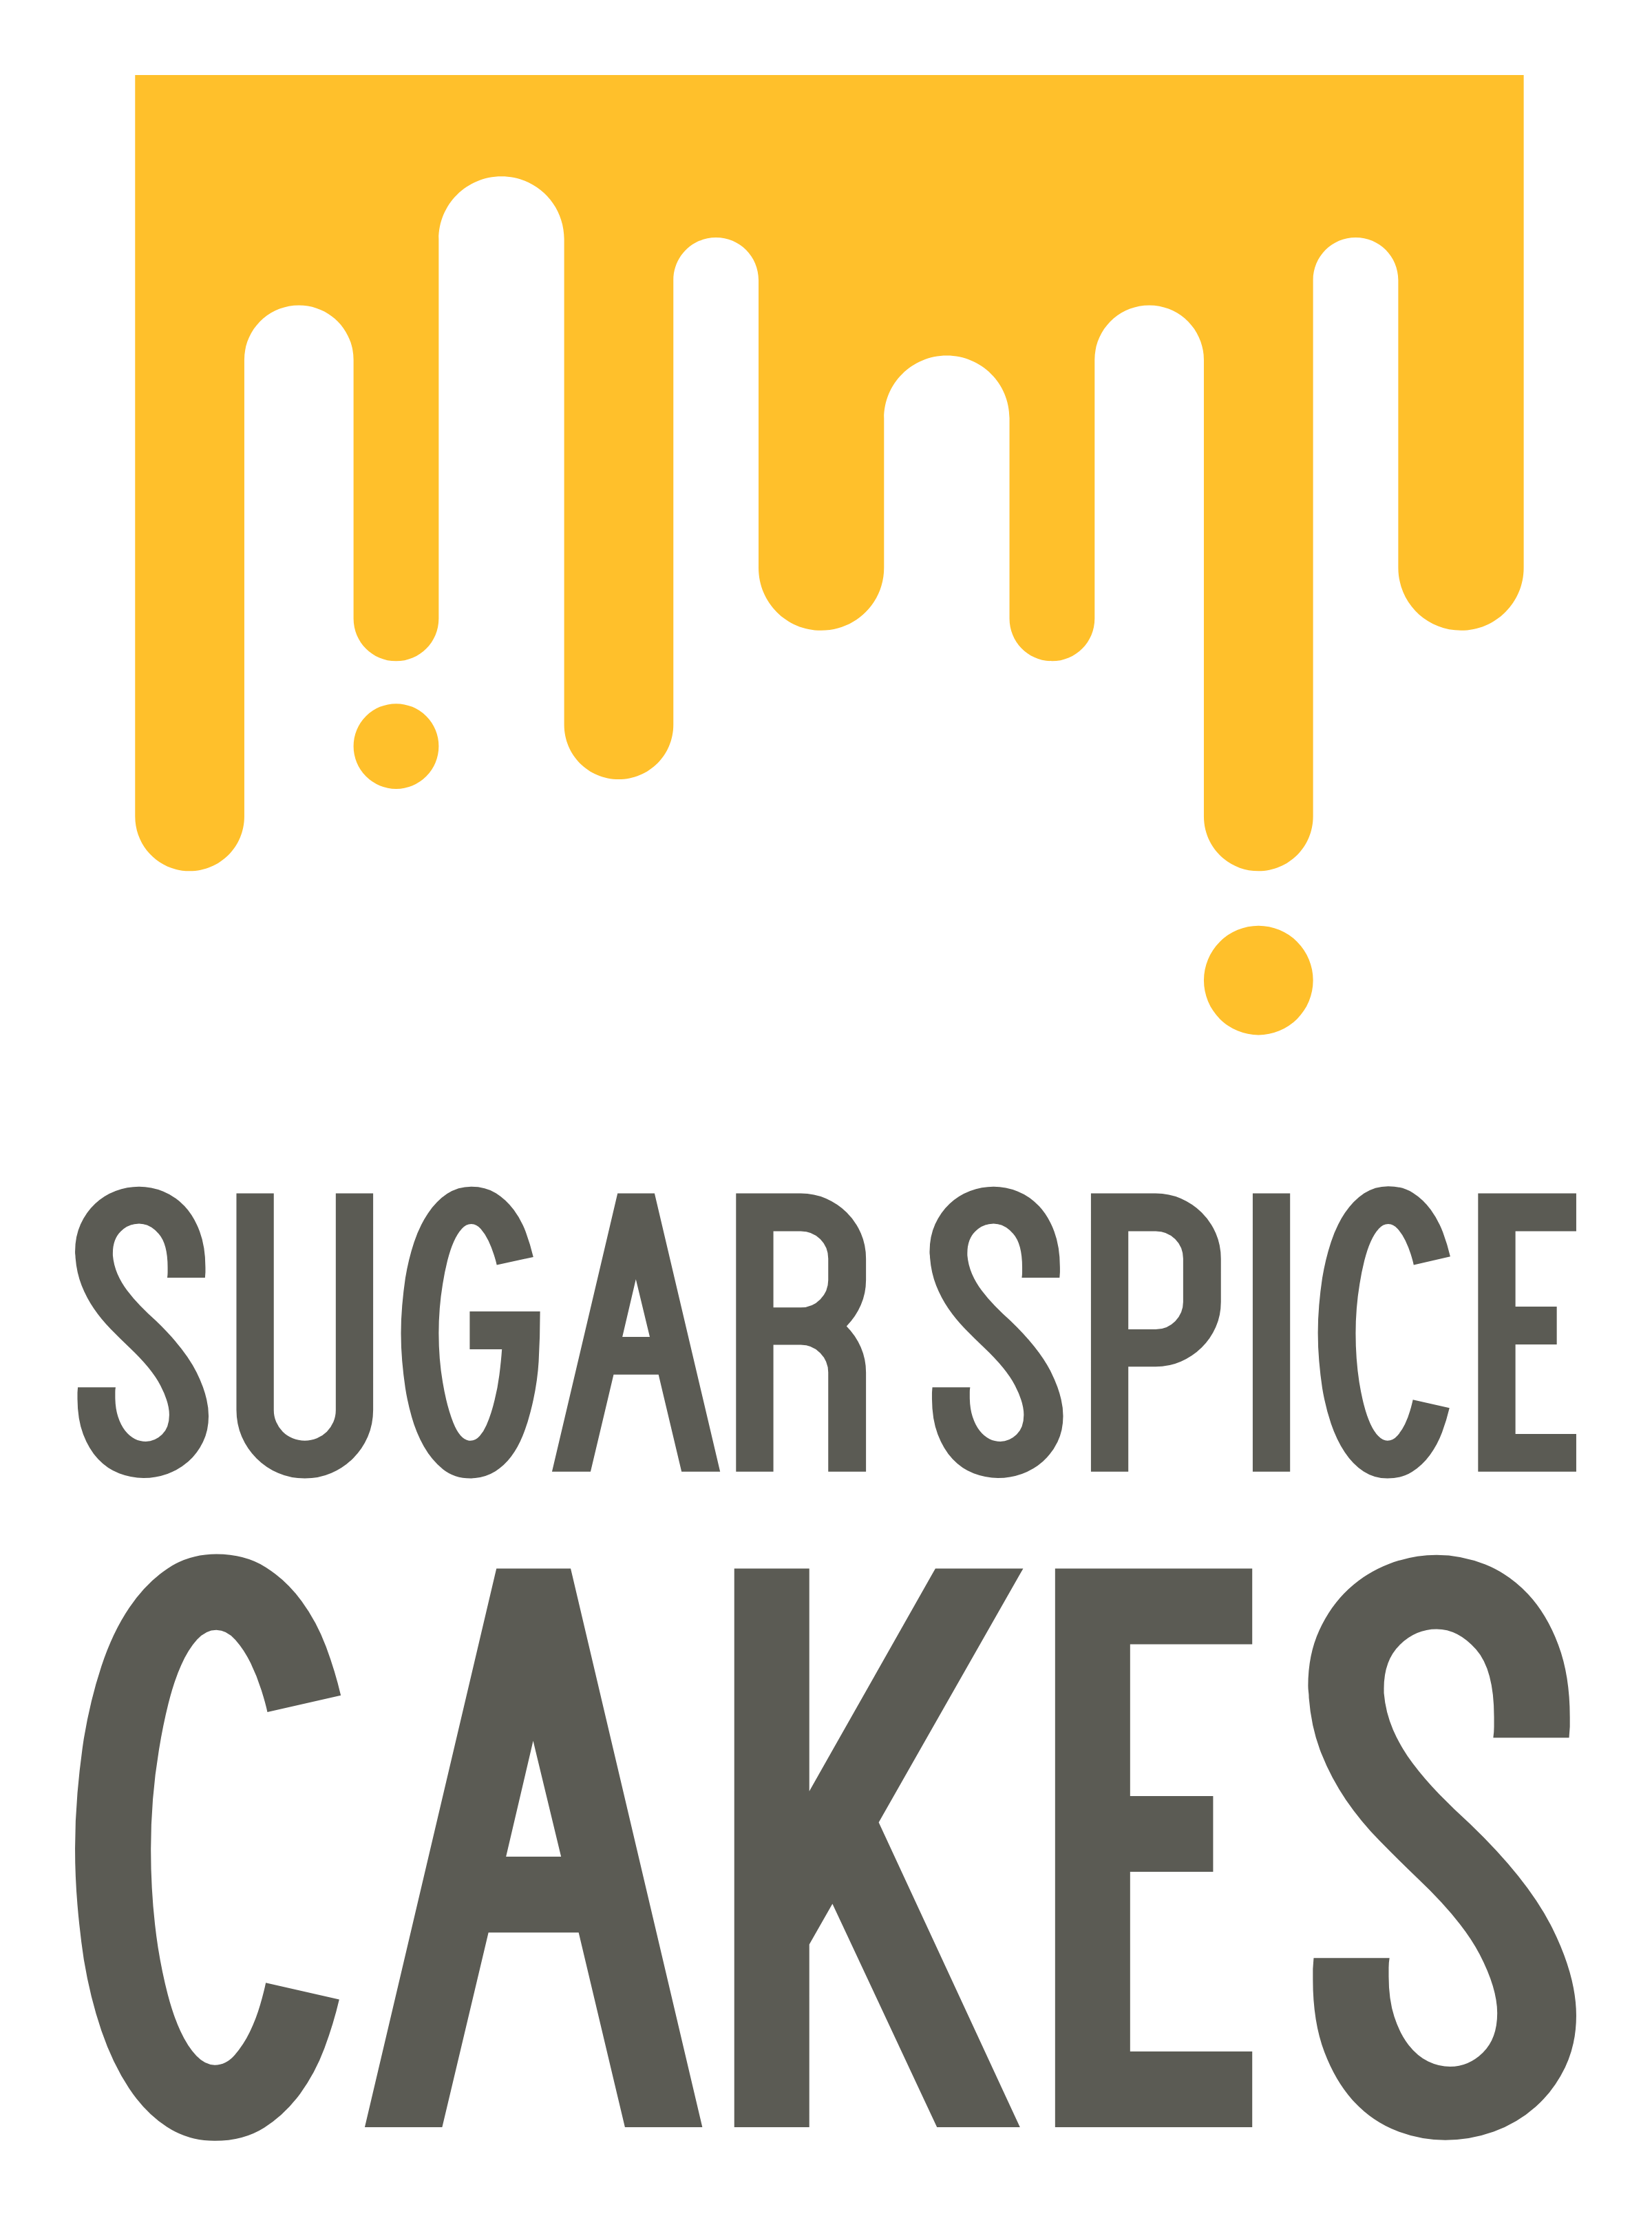 Sugar Spice Cakes